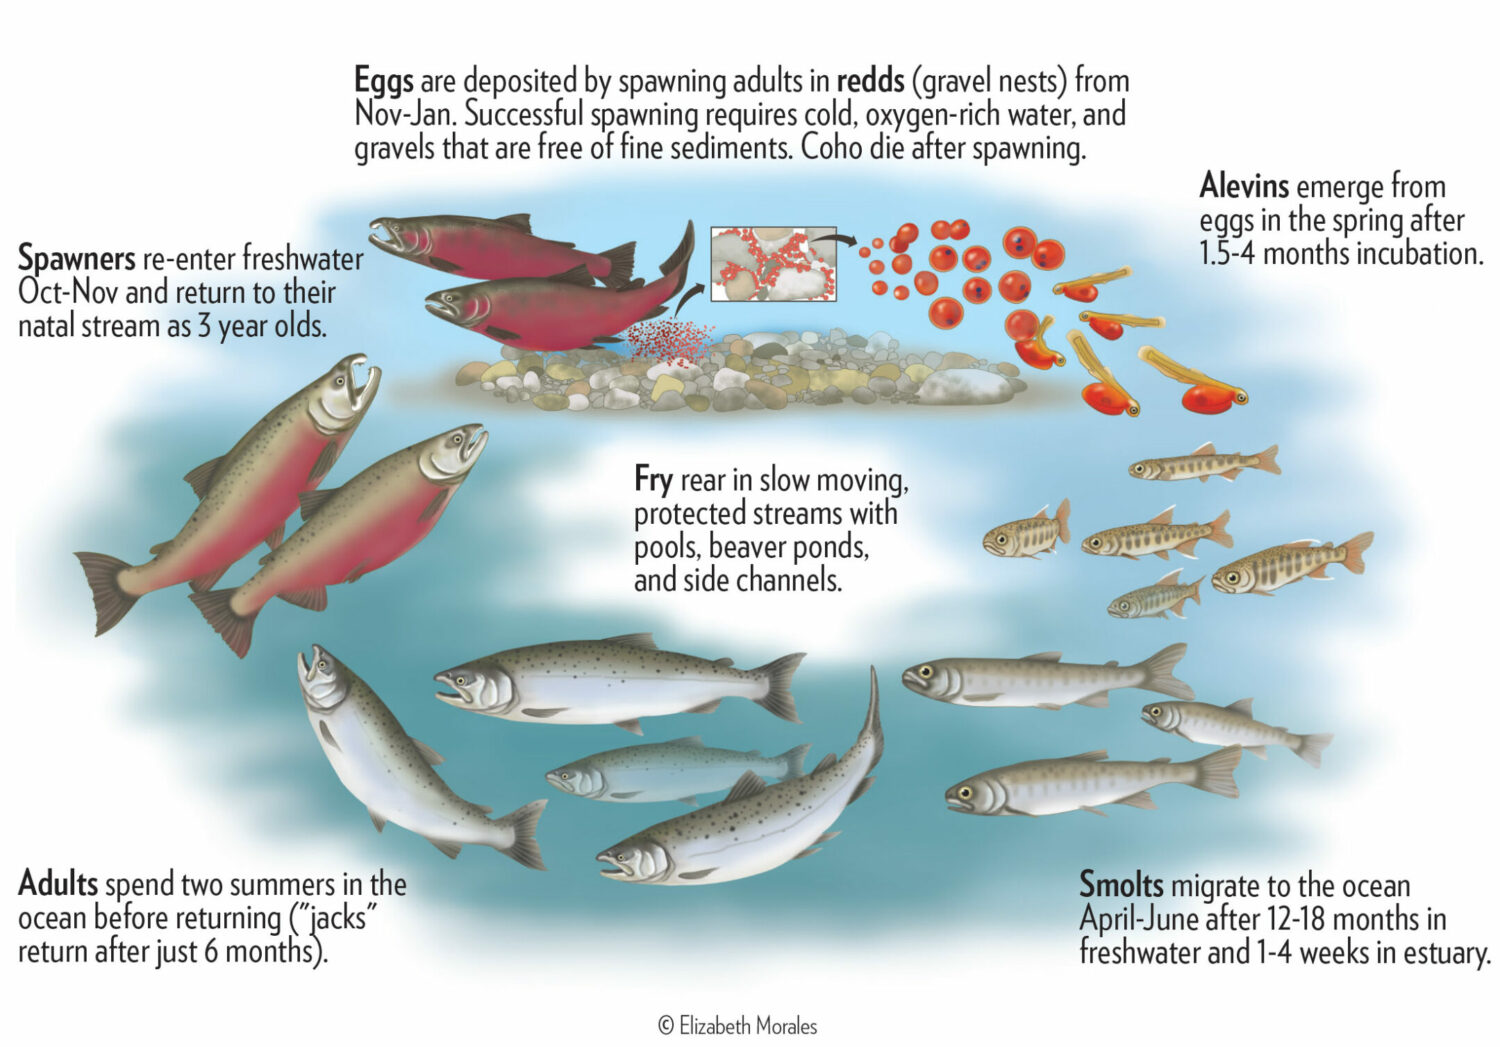 salmon life cycle map